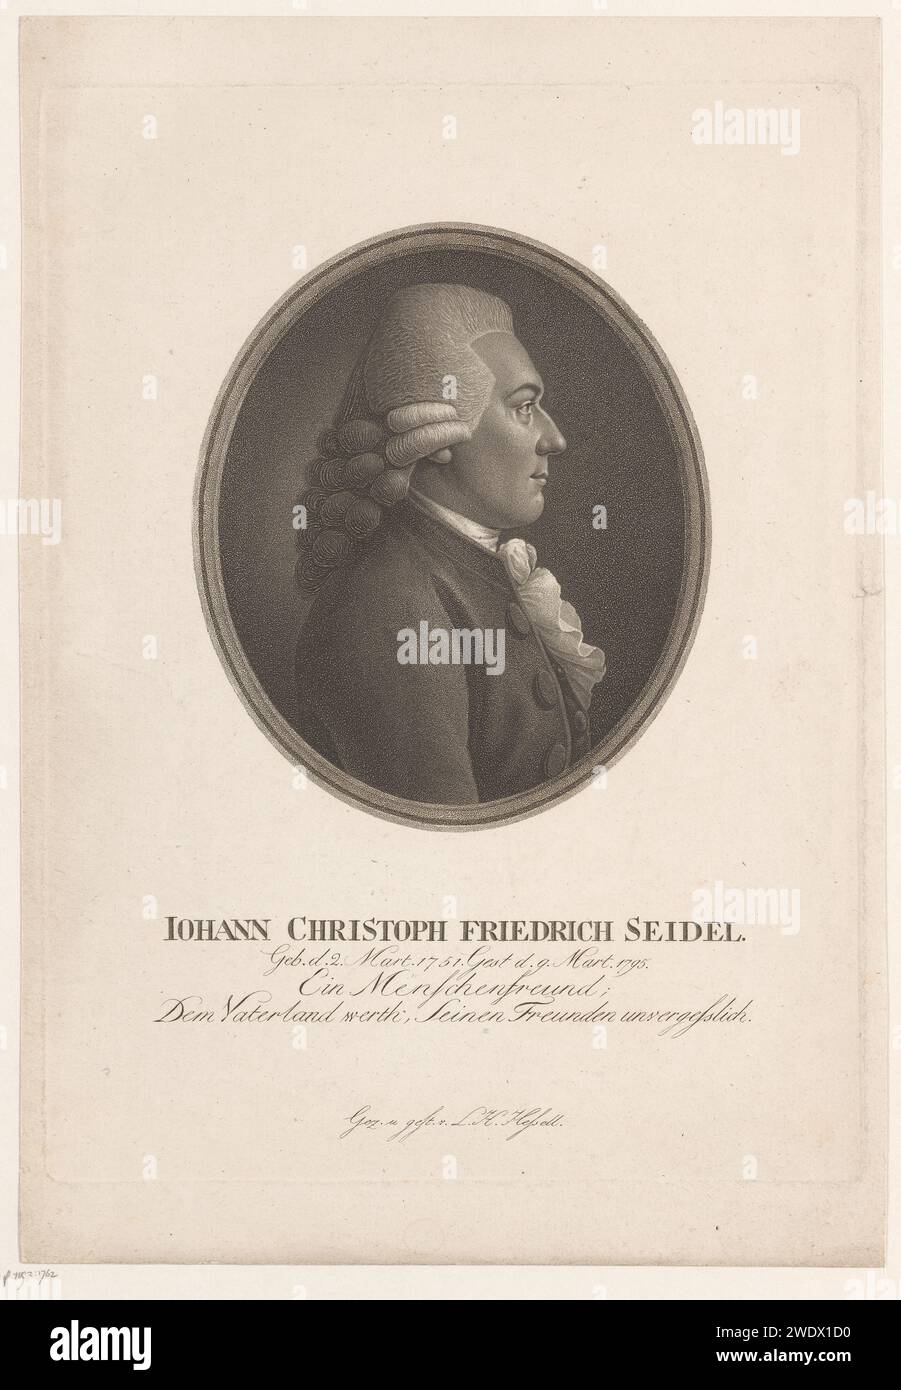 Portrait van Johann Christoph Friedrich Seidel, Leonhard Heinrich Hessell, 1795 - 1850 print   paper  historical persons Stock Photo